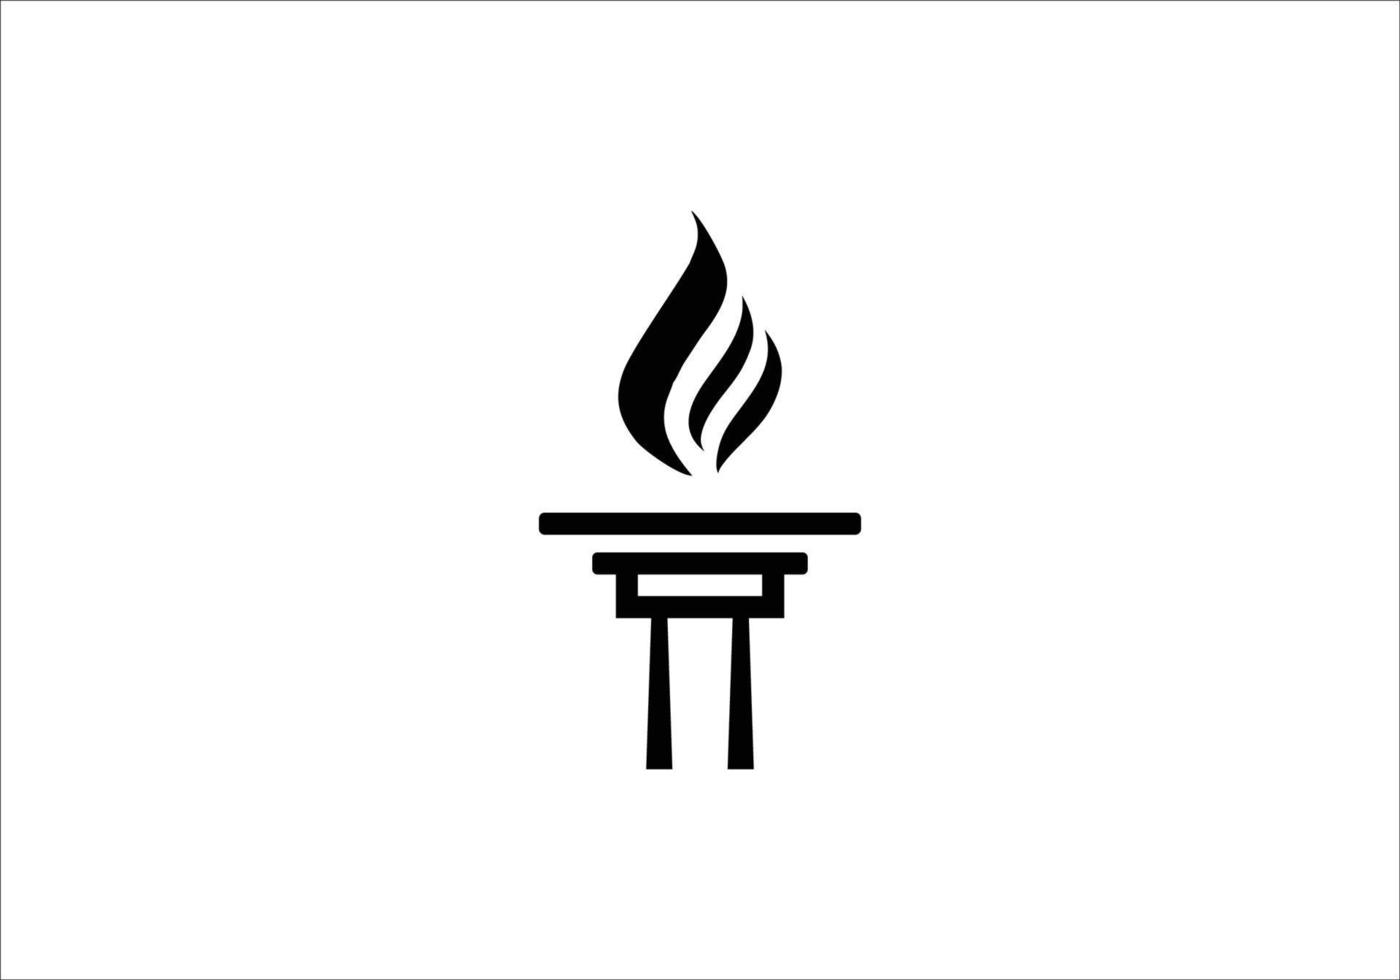 Initial Letter T or pillar for Torch logo design vector